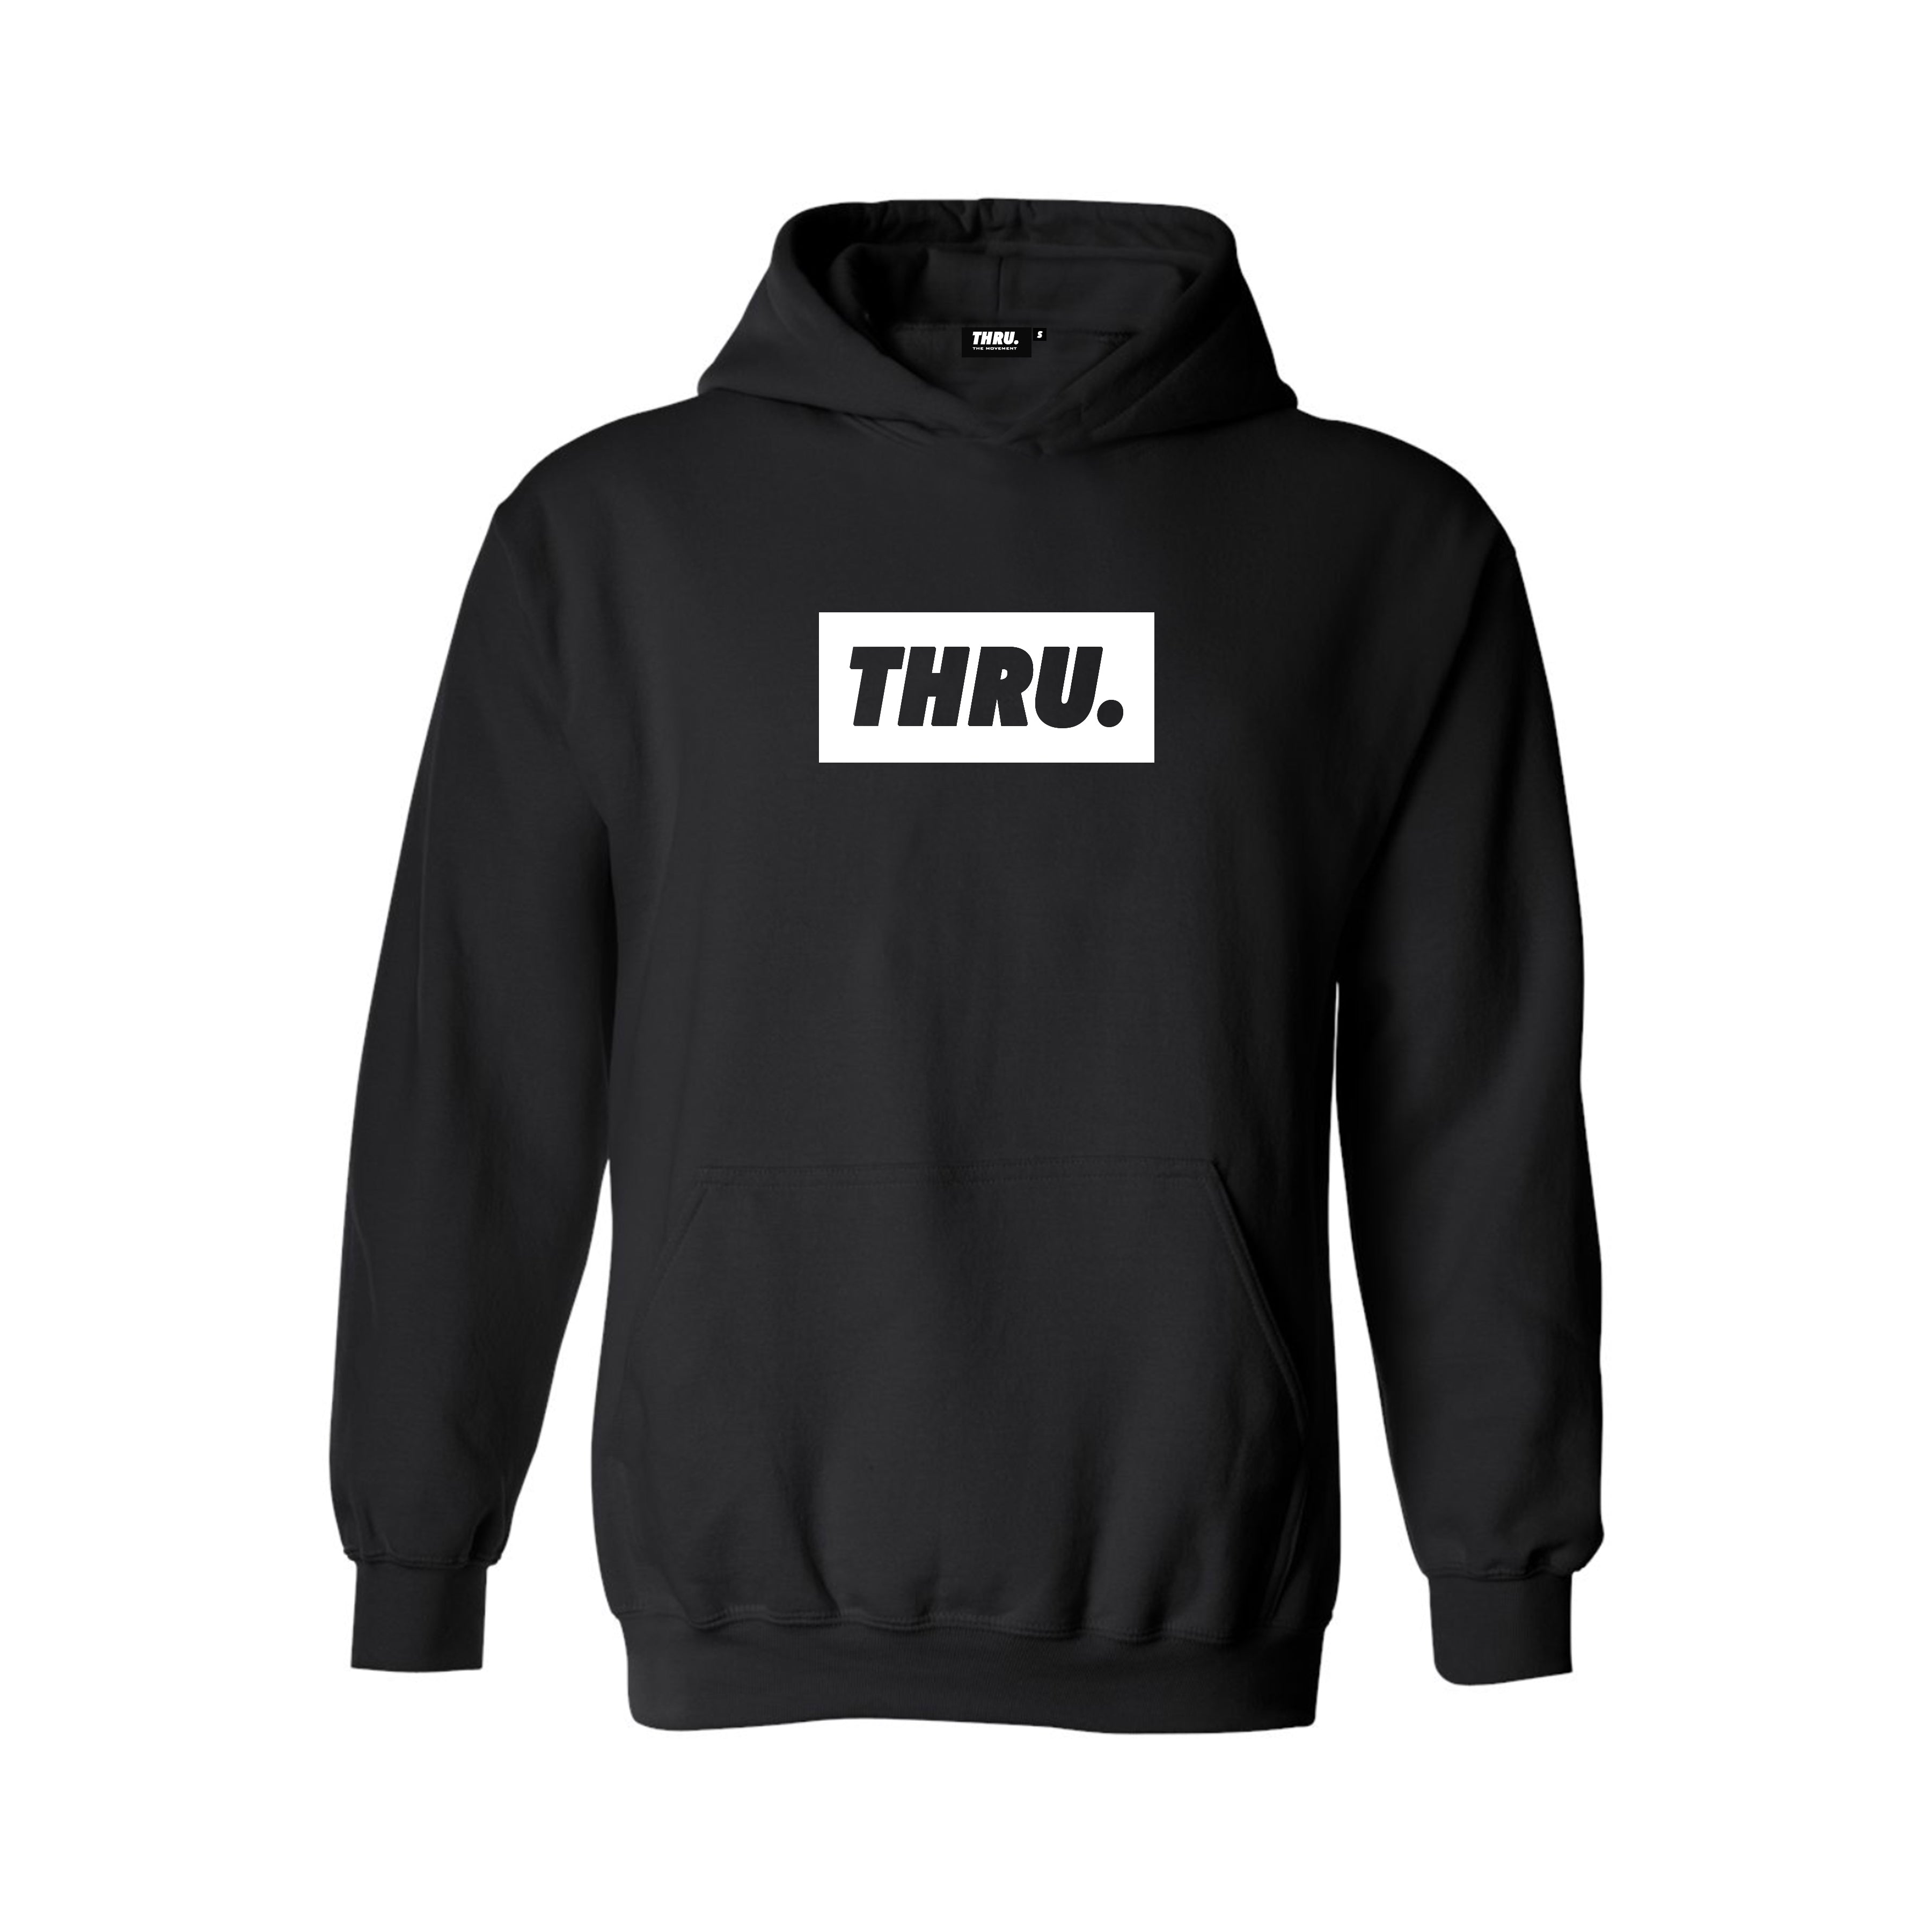 Box Logo - THRU.